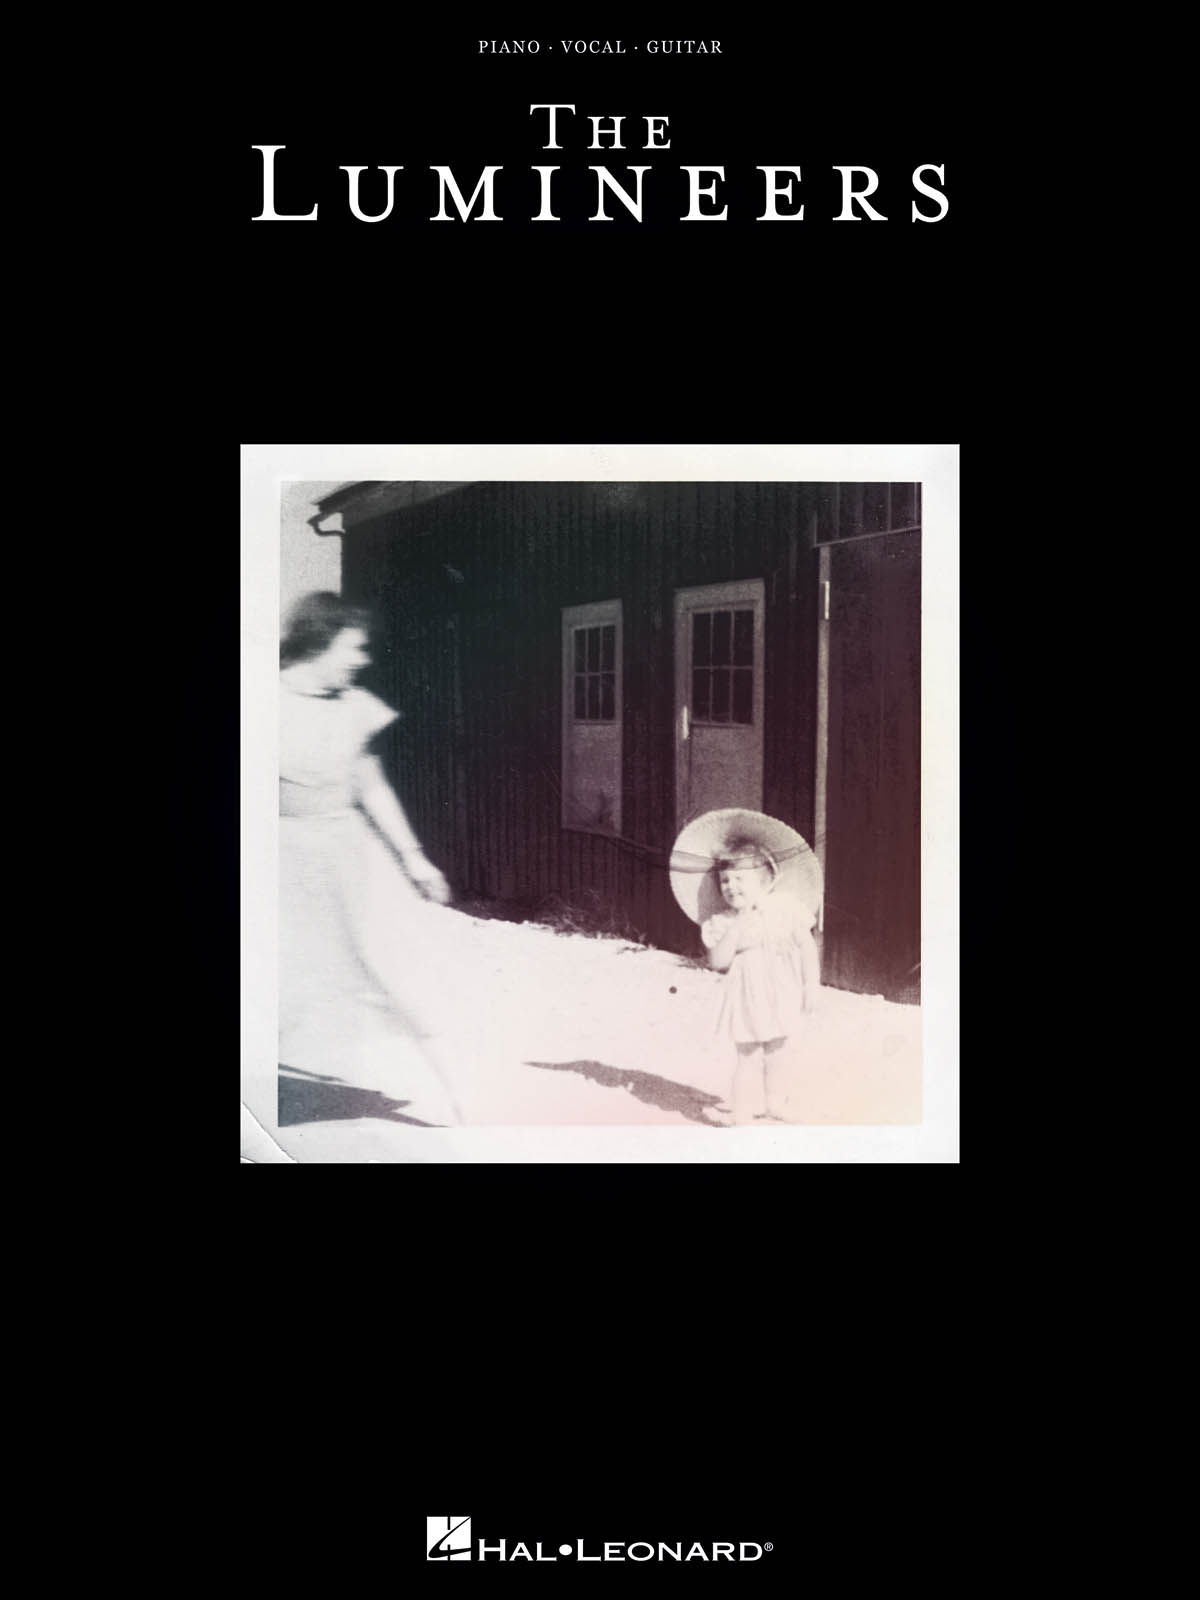 The Lumineers PVG Songbook - noty pro zpěv, klavír s akordy pro kytaru